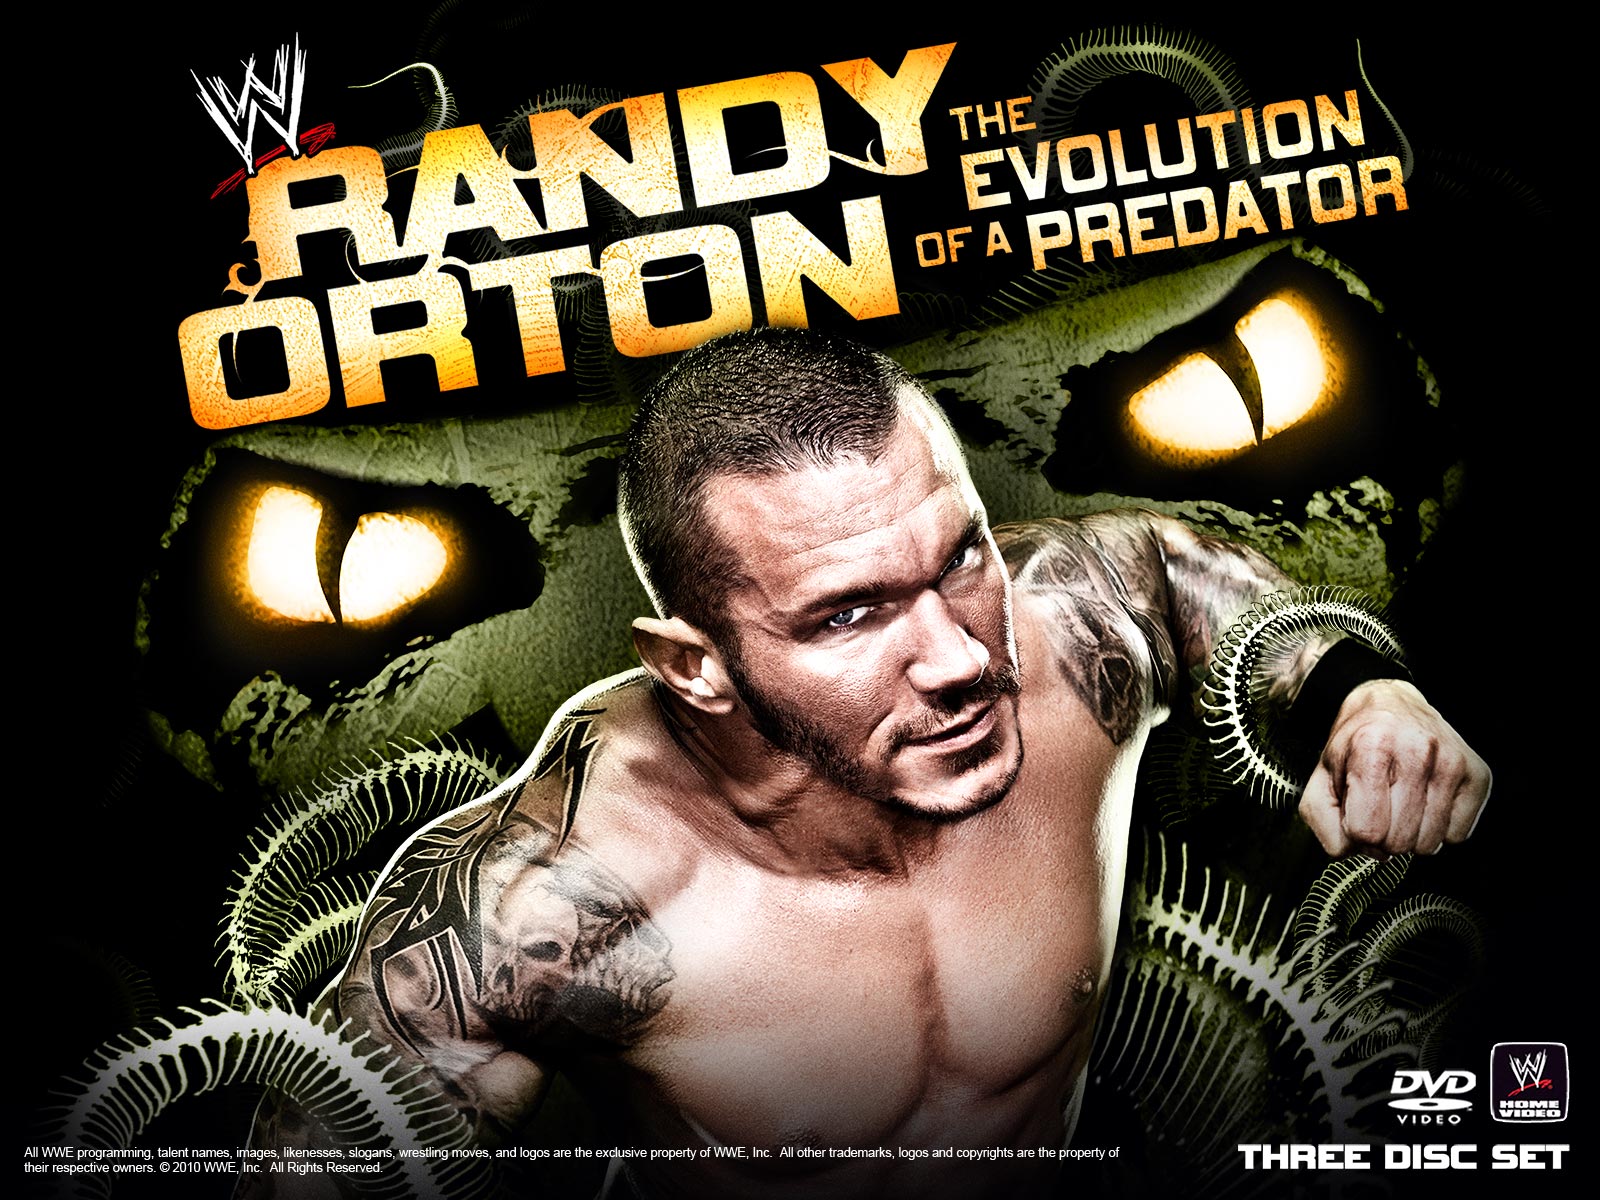 WWE Evolution of a predator